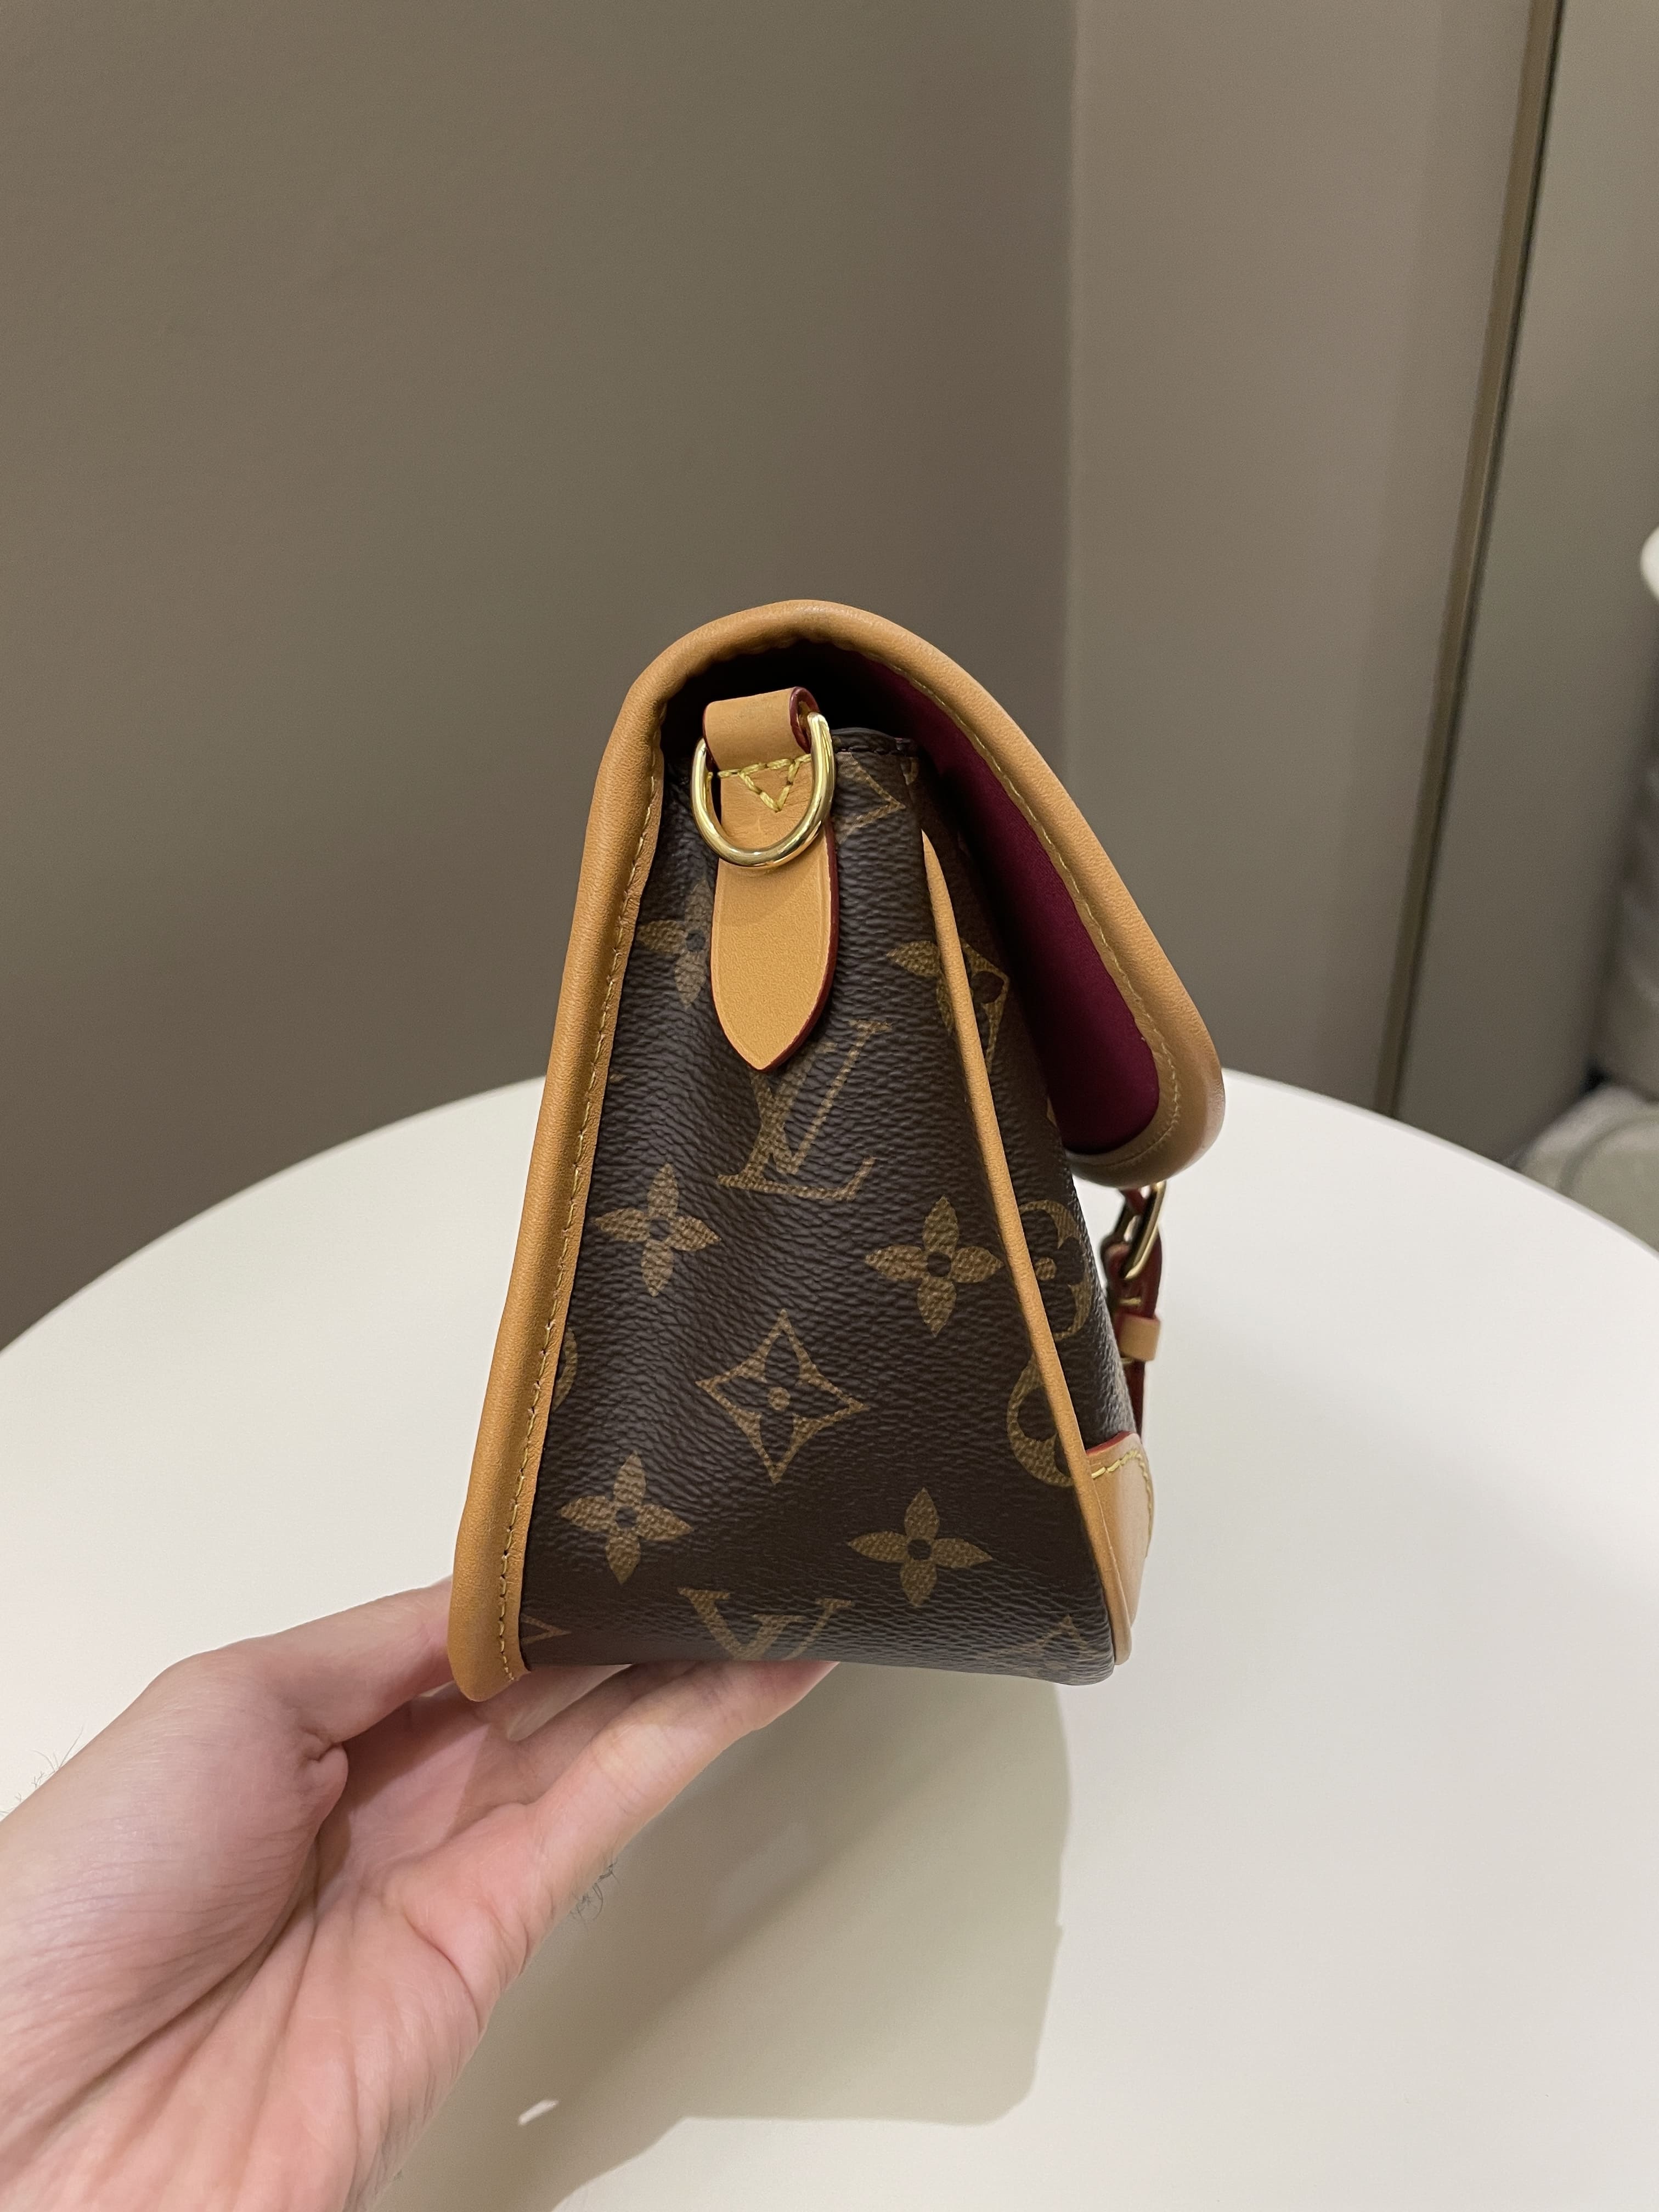 Louis Vuitton Monogram Diane PM - Shoulder Bags, Handbags